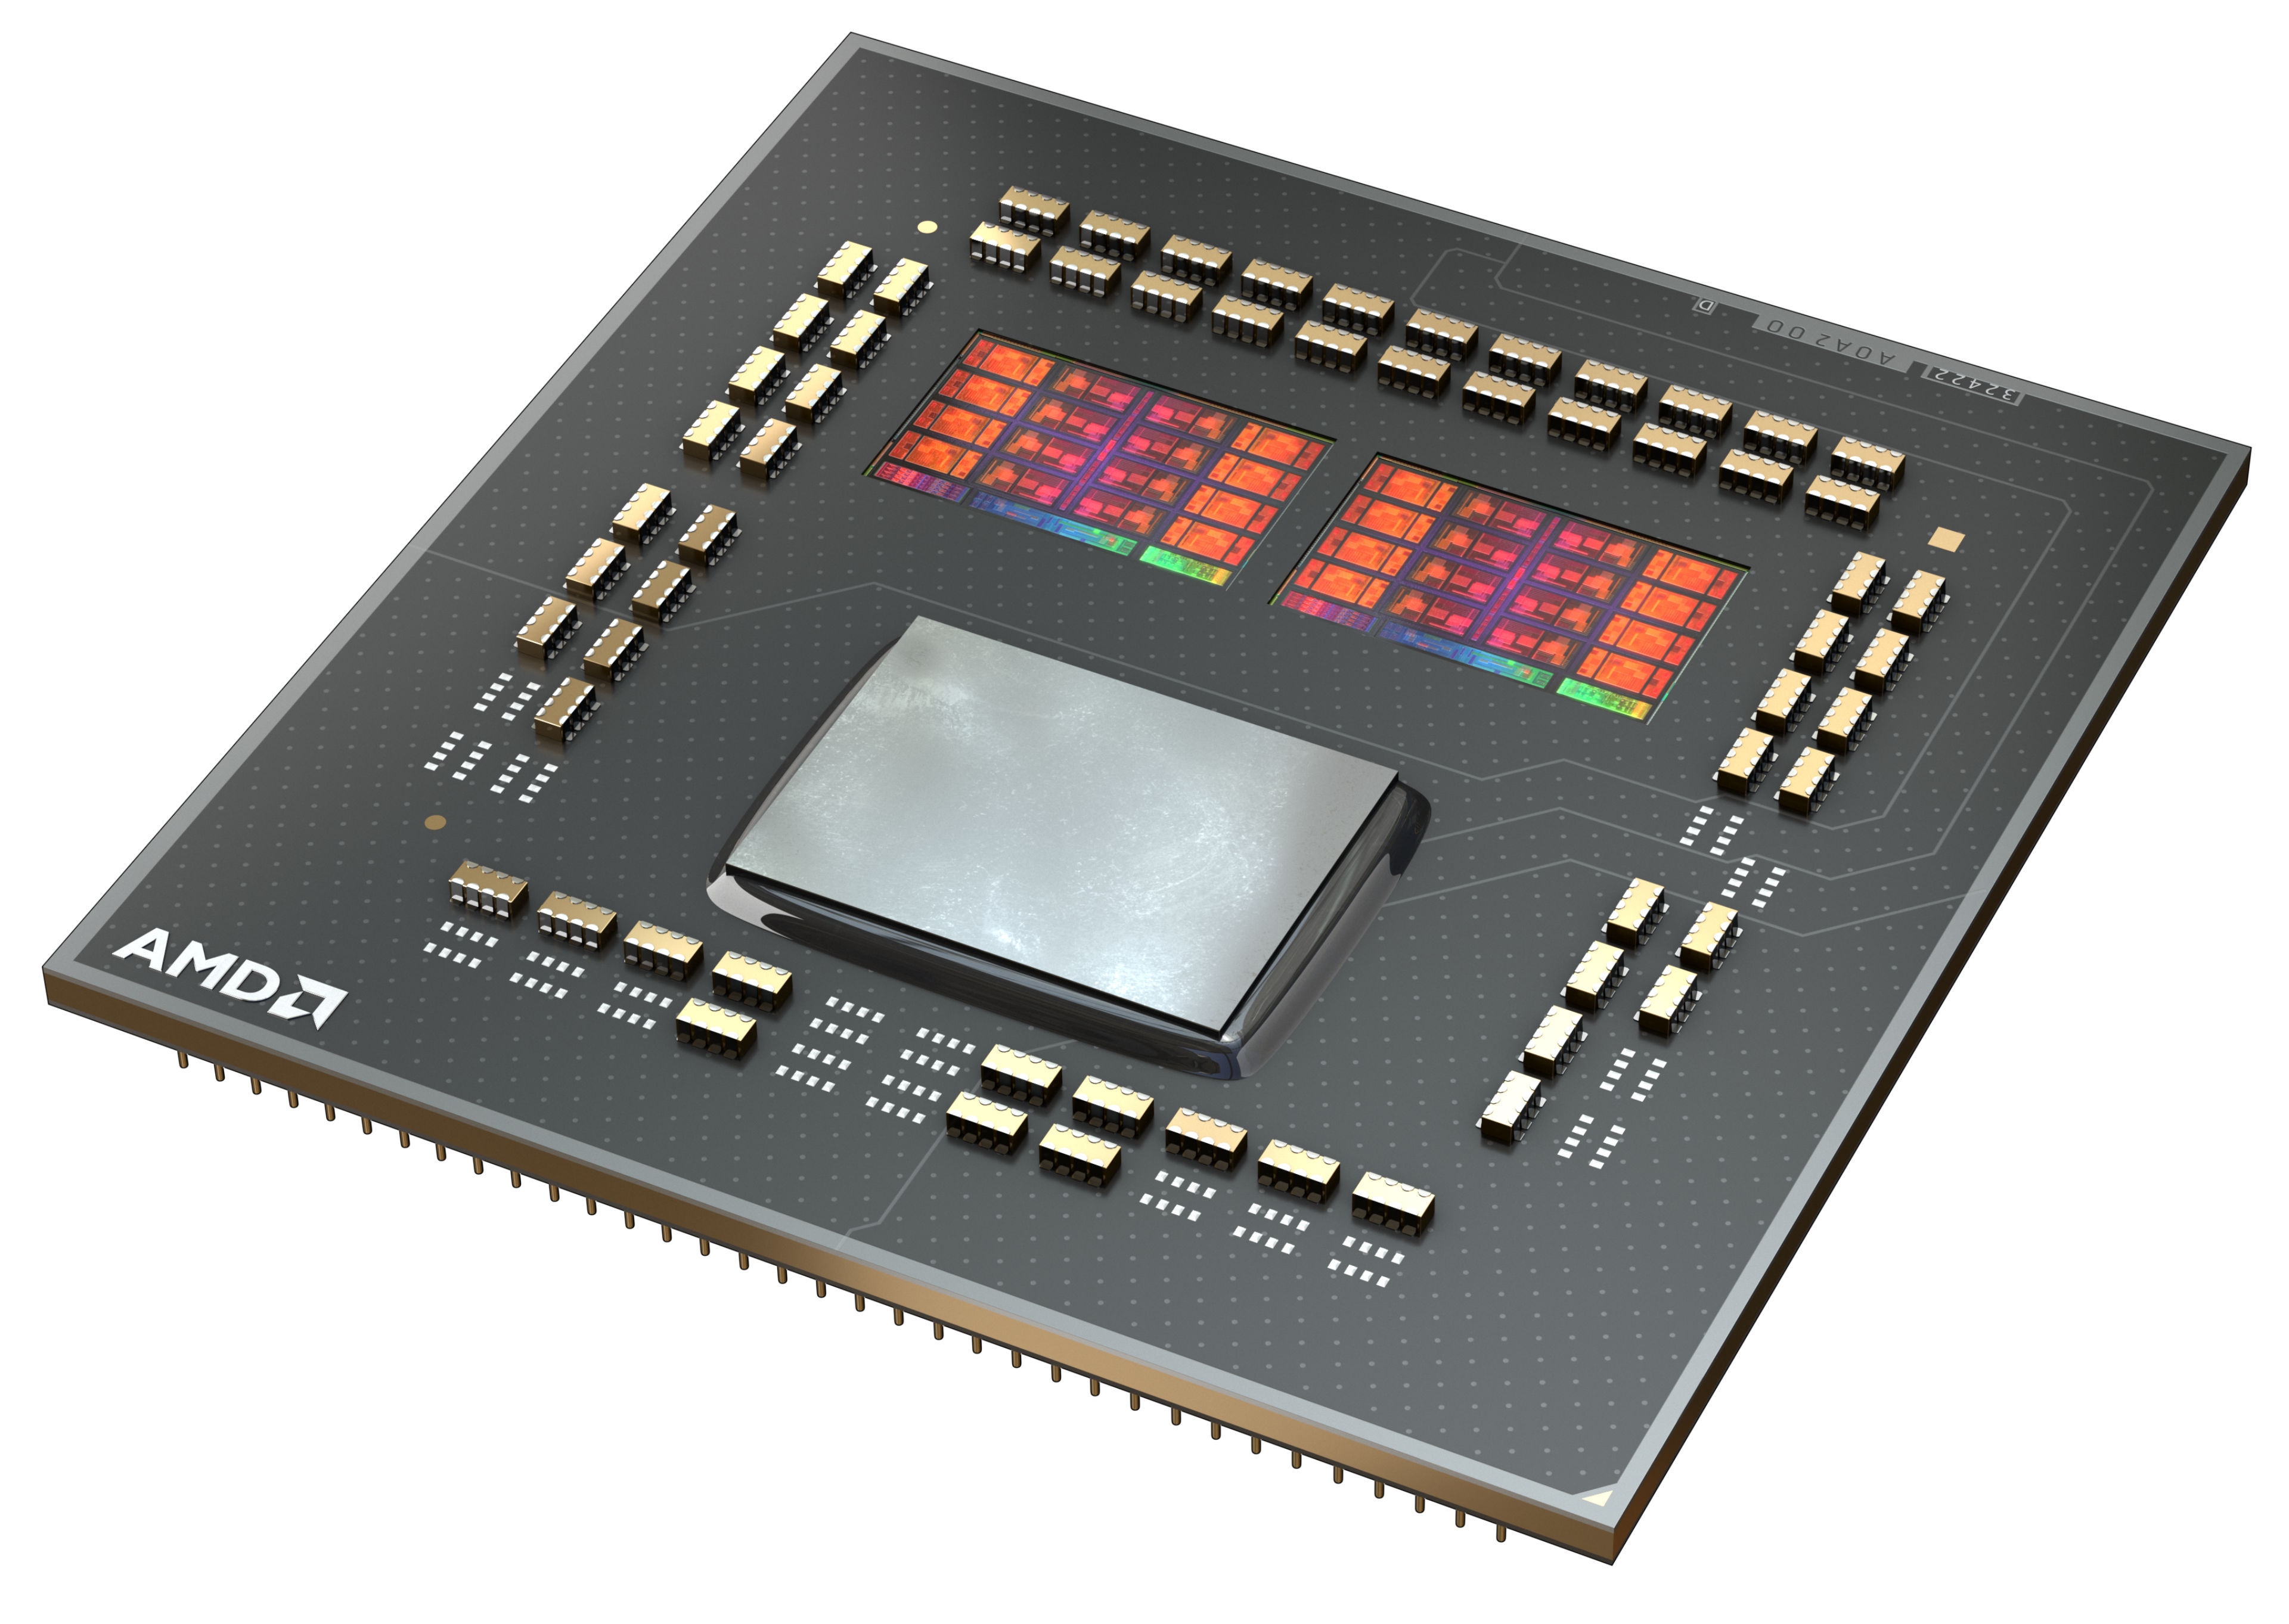 AMD Ryzen 9 5900X CPU Processor AM4 6 Core 24 Thread 3.7GHz 4.8GHz Turbo  105W